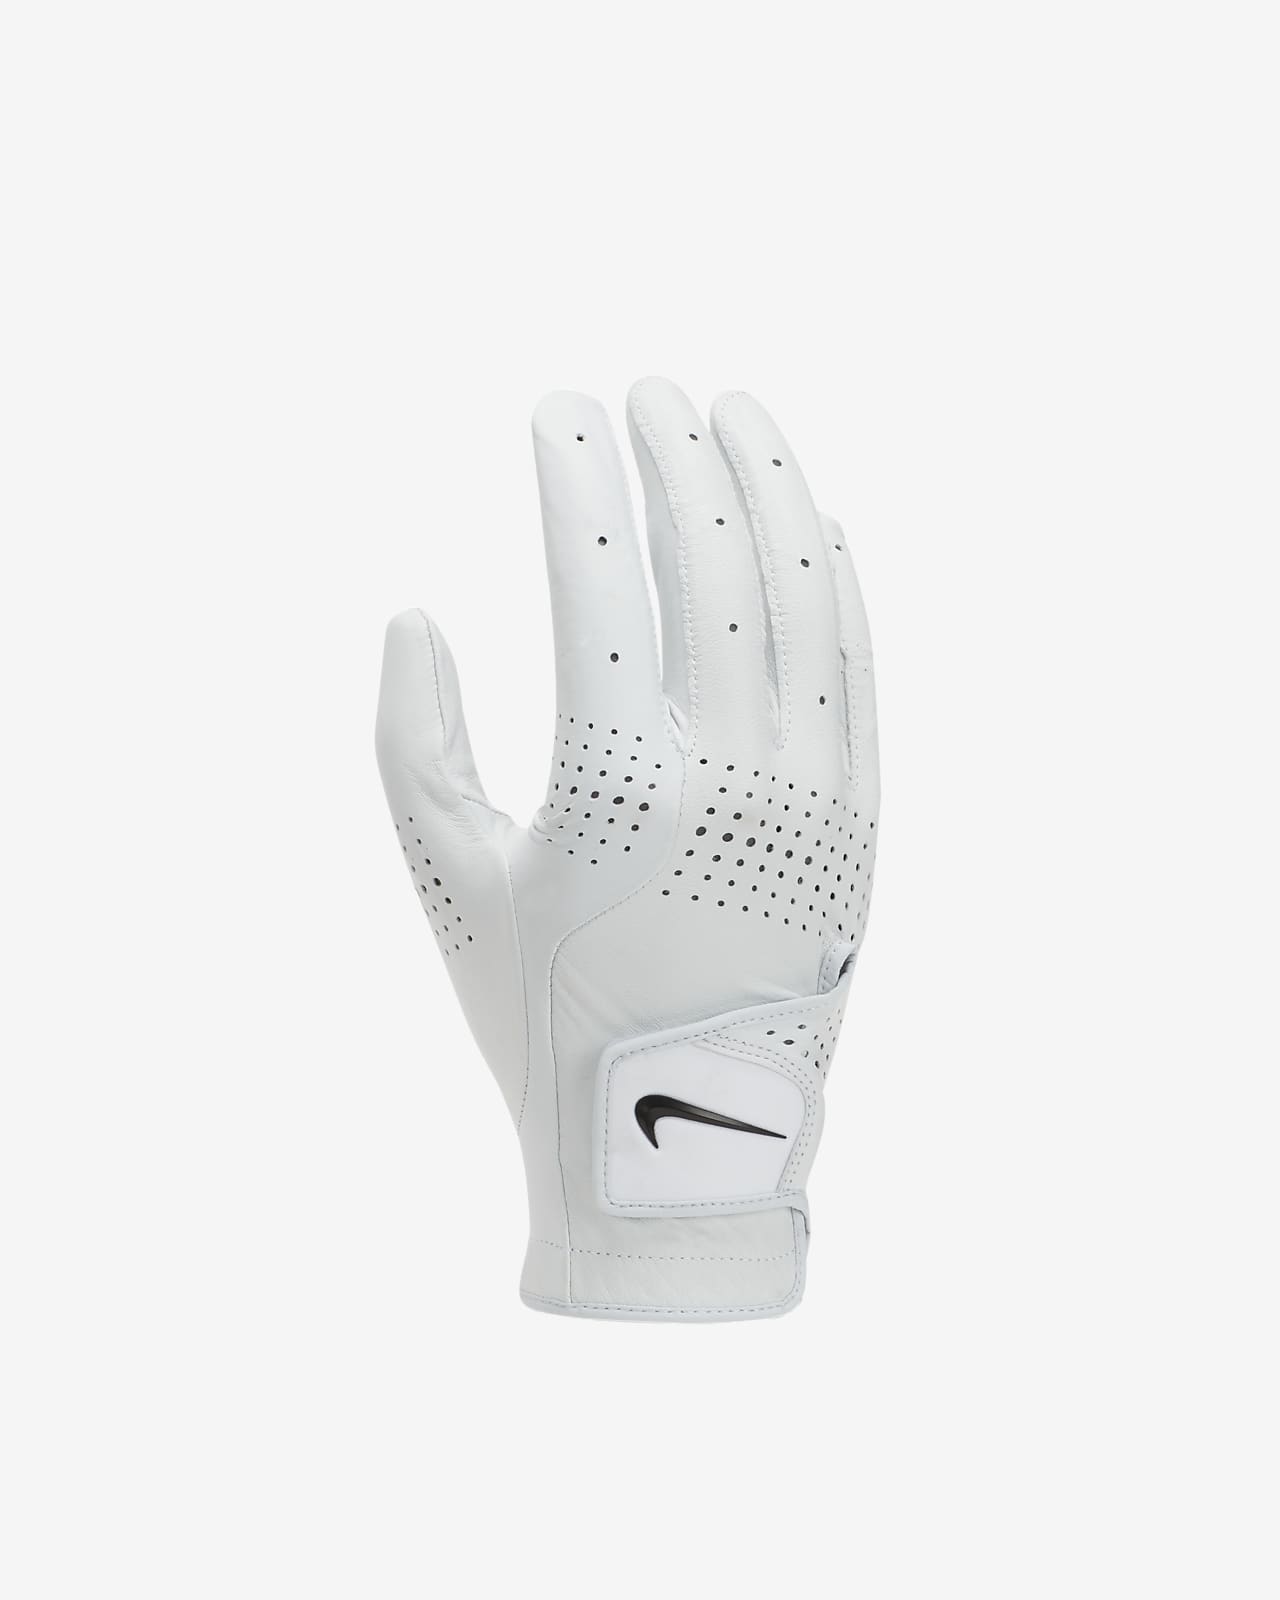 Nike Tour Classic 3 Golf Glove (Right 